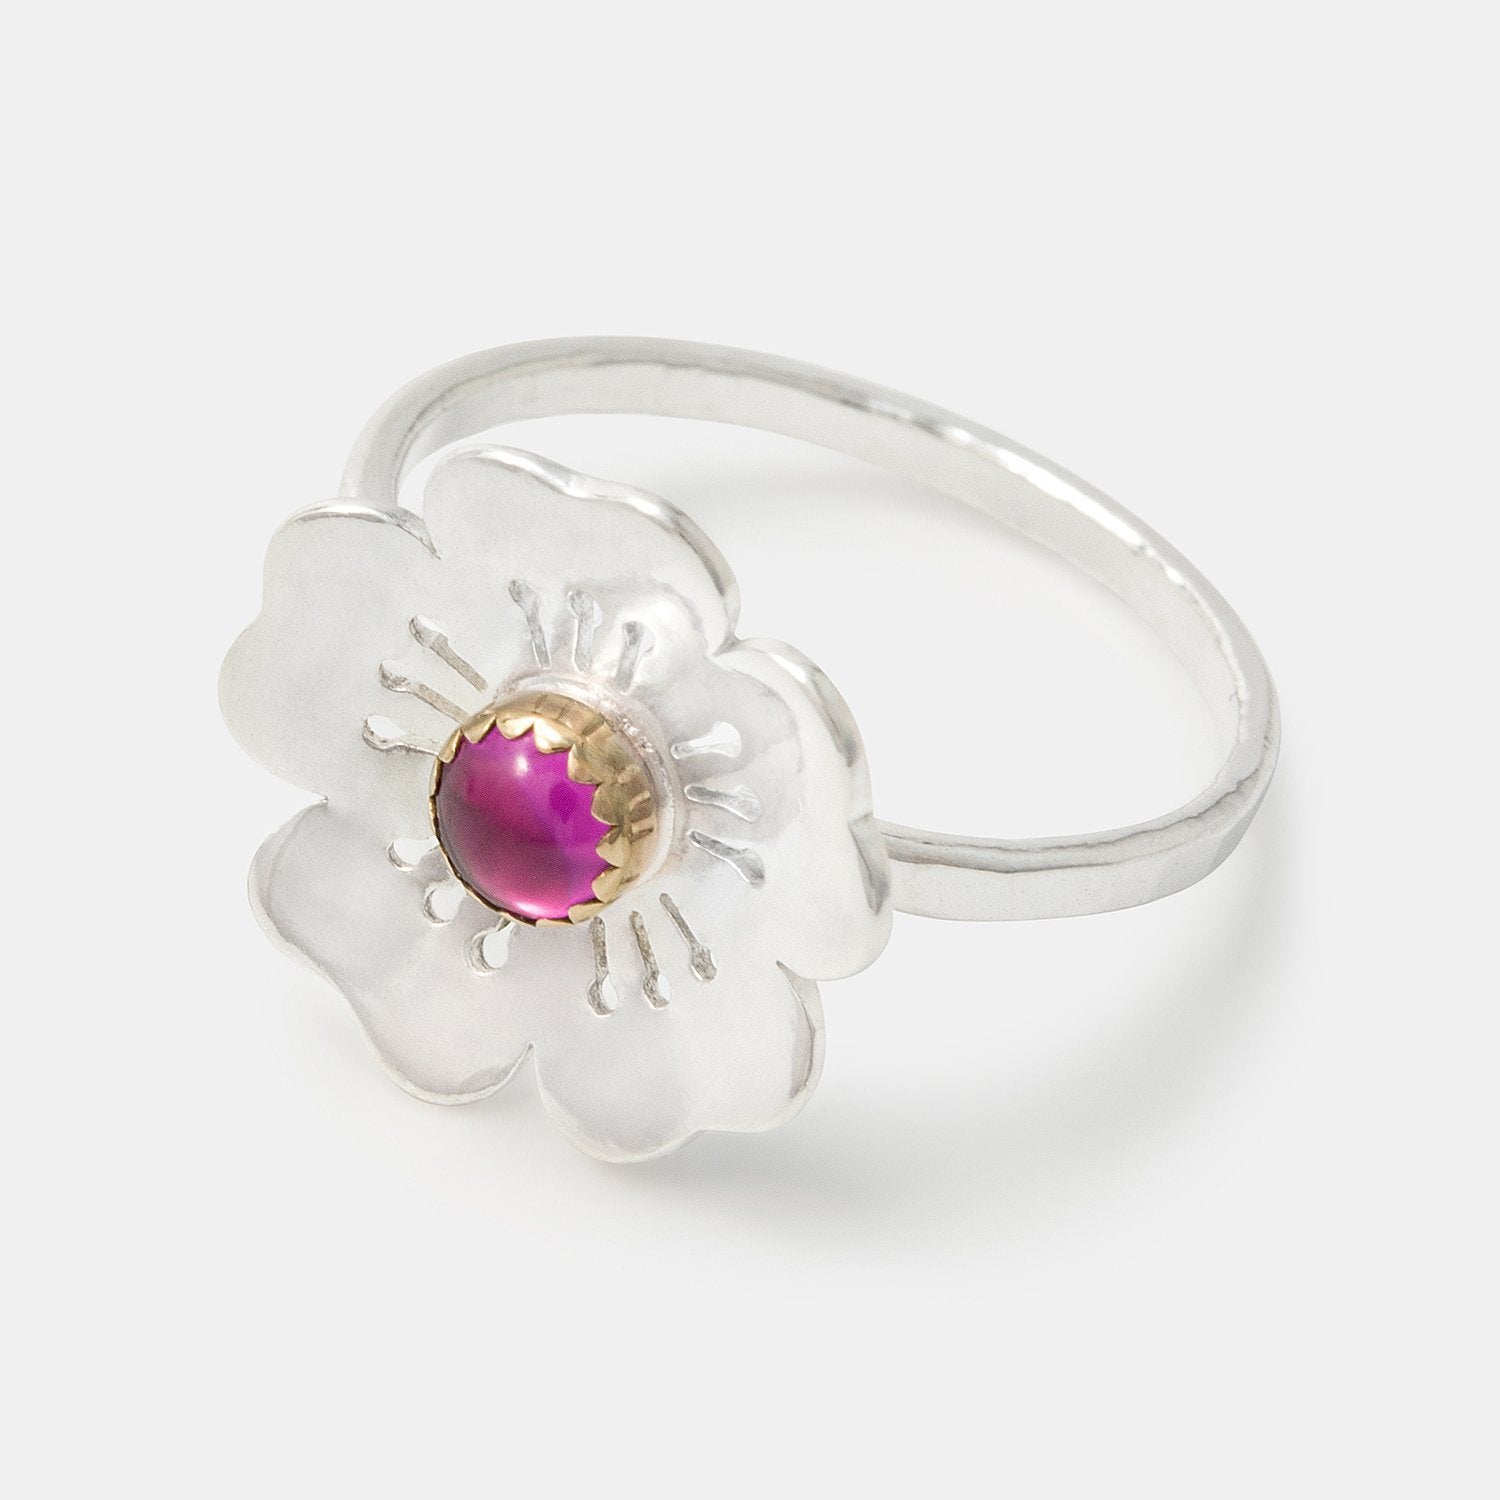 Cherry blossom & pink sapphire ring - Simone Walsh Jewellery Australia